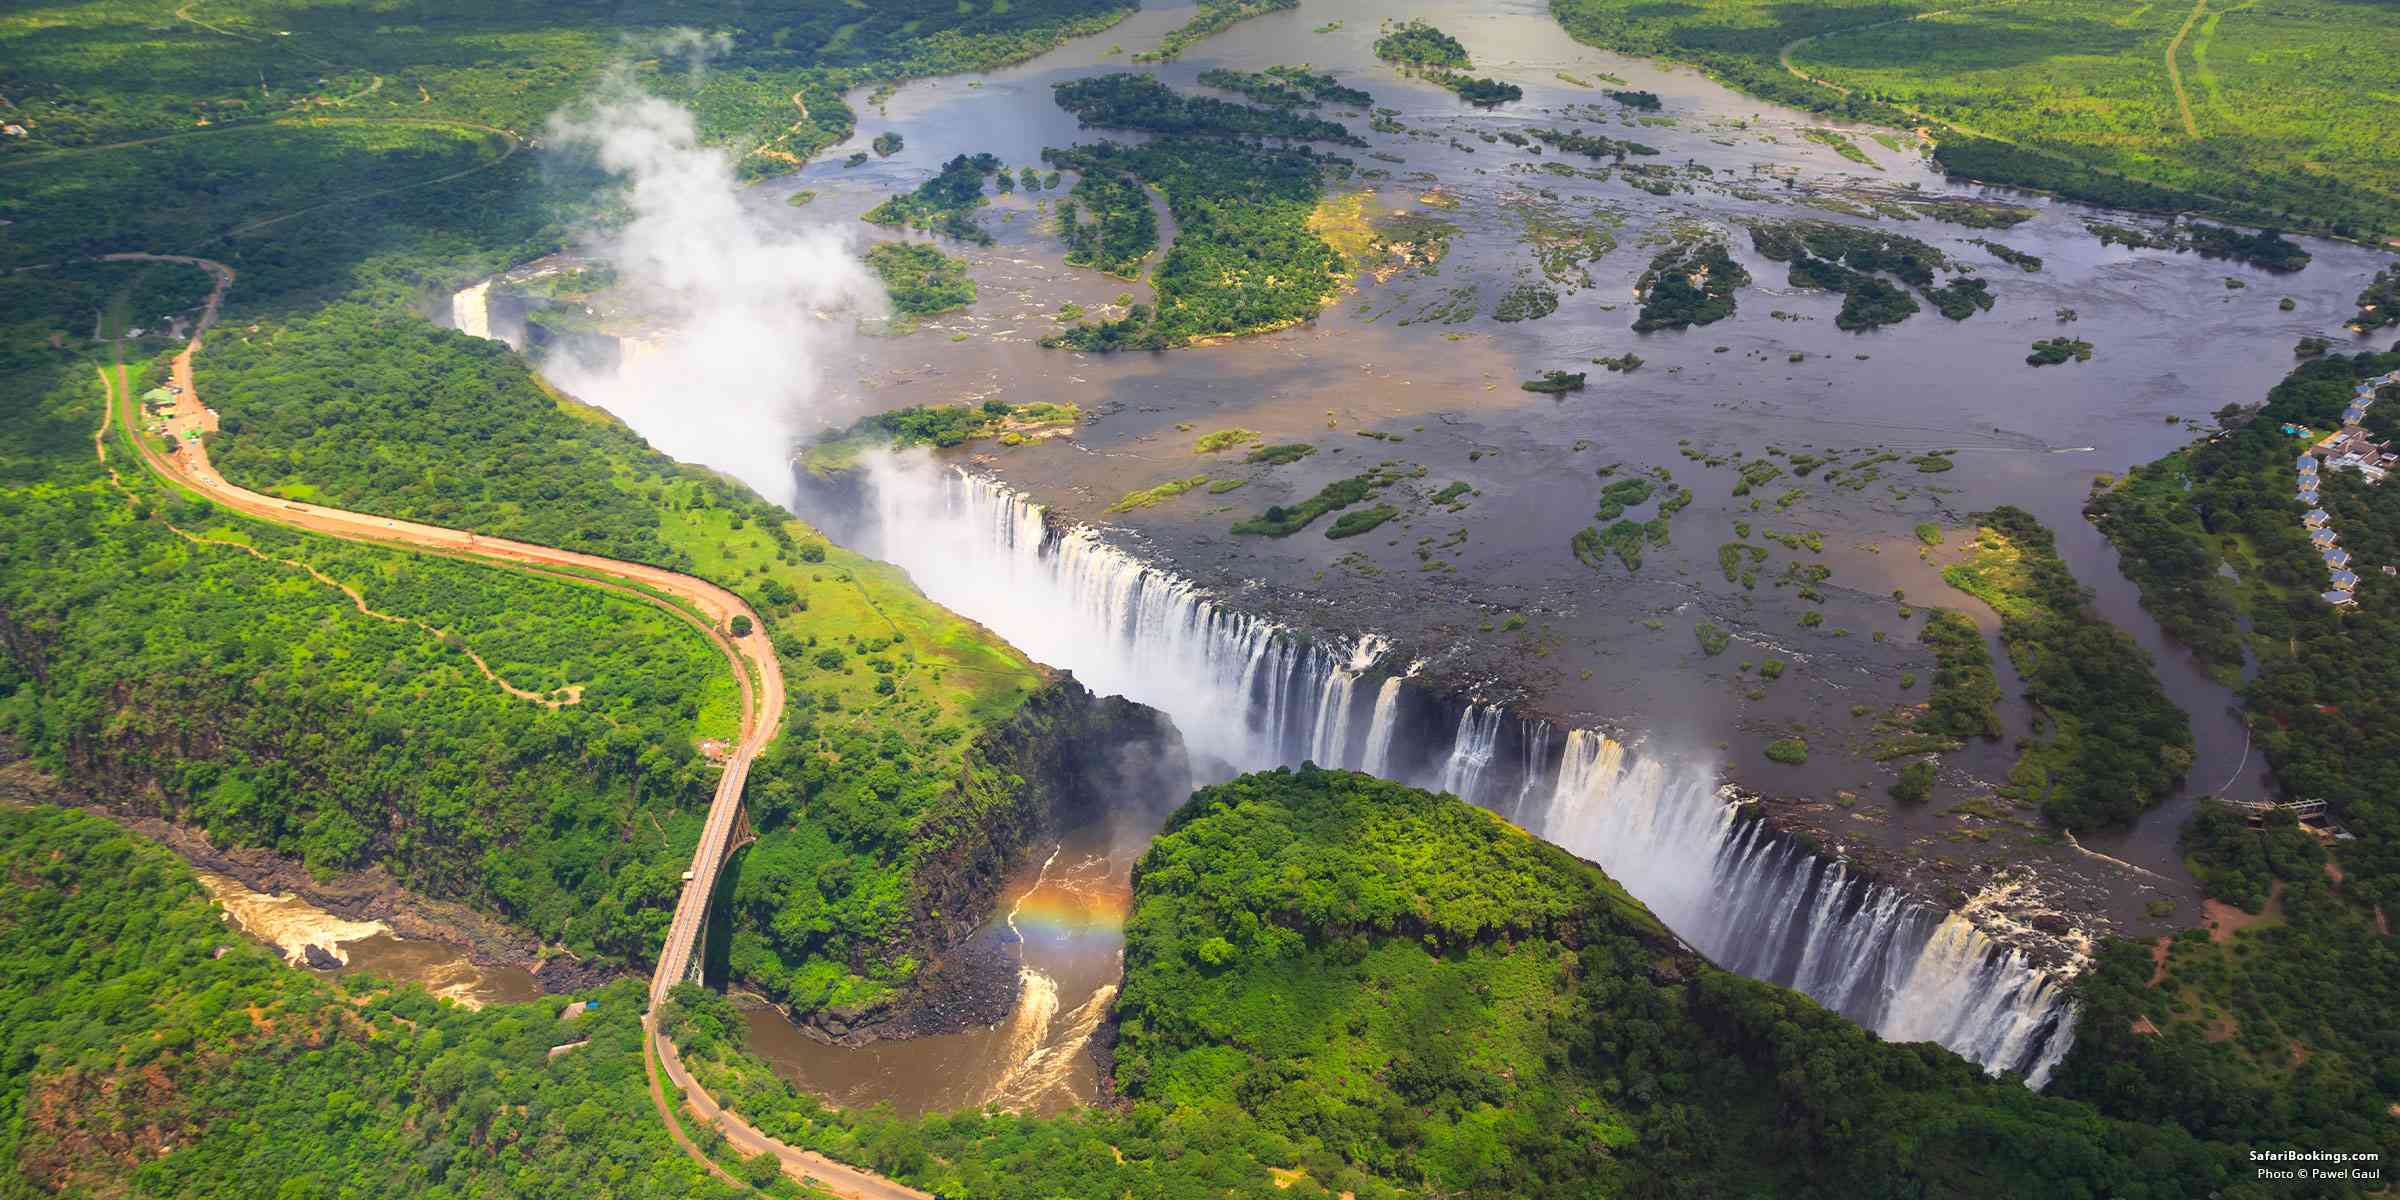 Victoria Falls: Zambia vs Zimbabwe, Which Side Is Better?